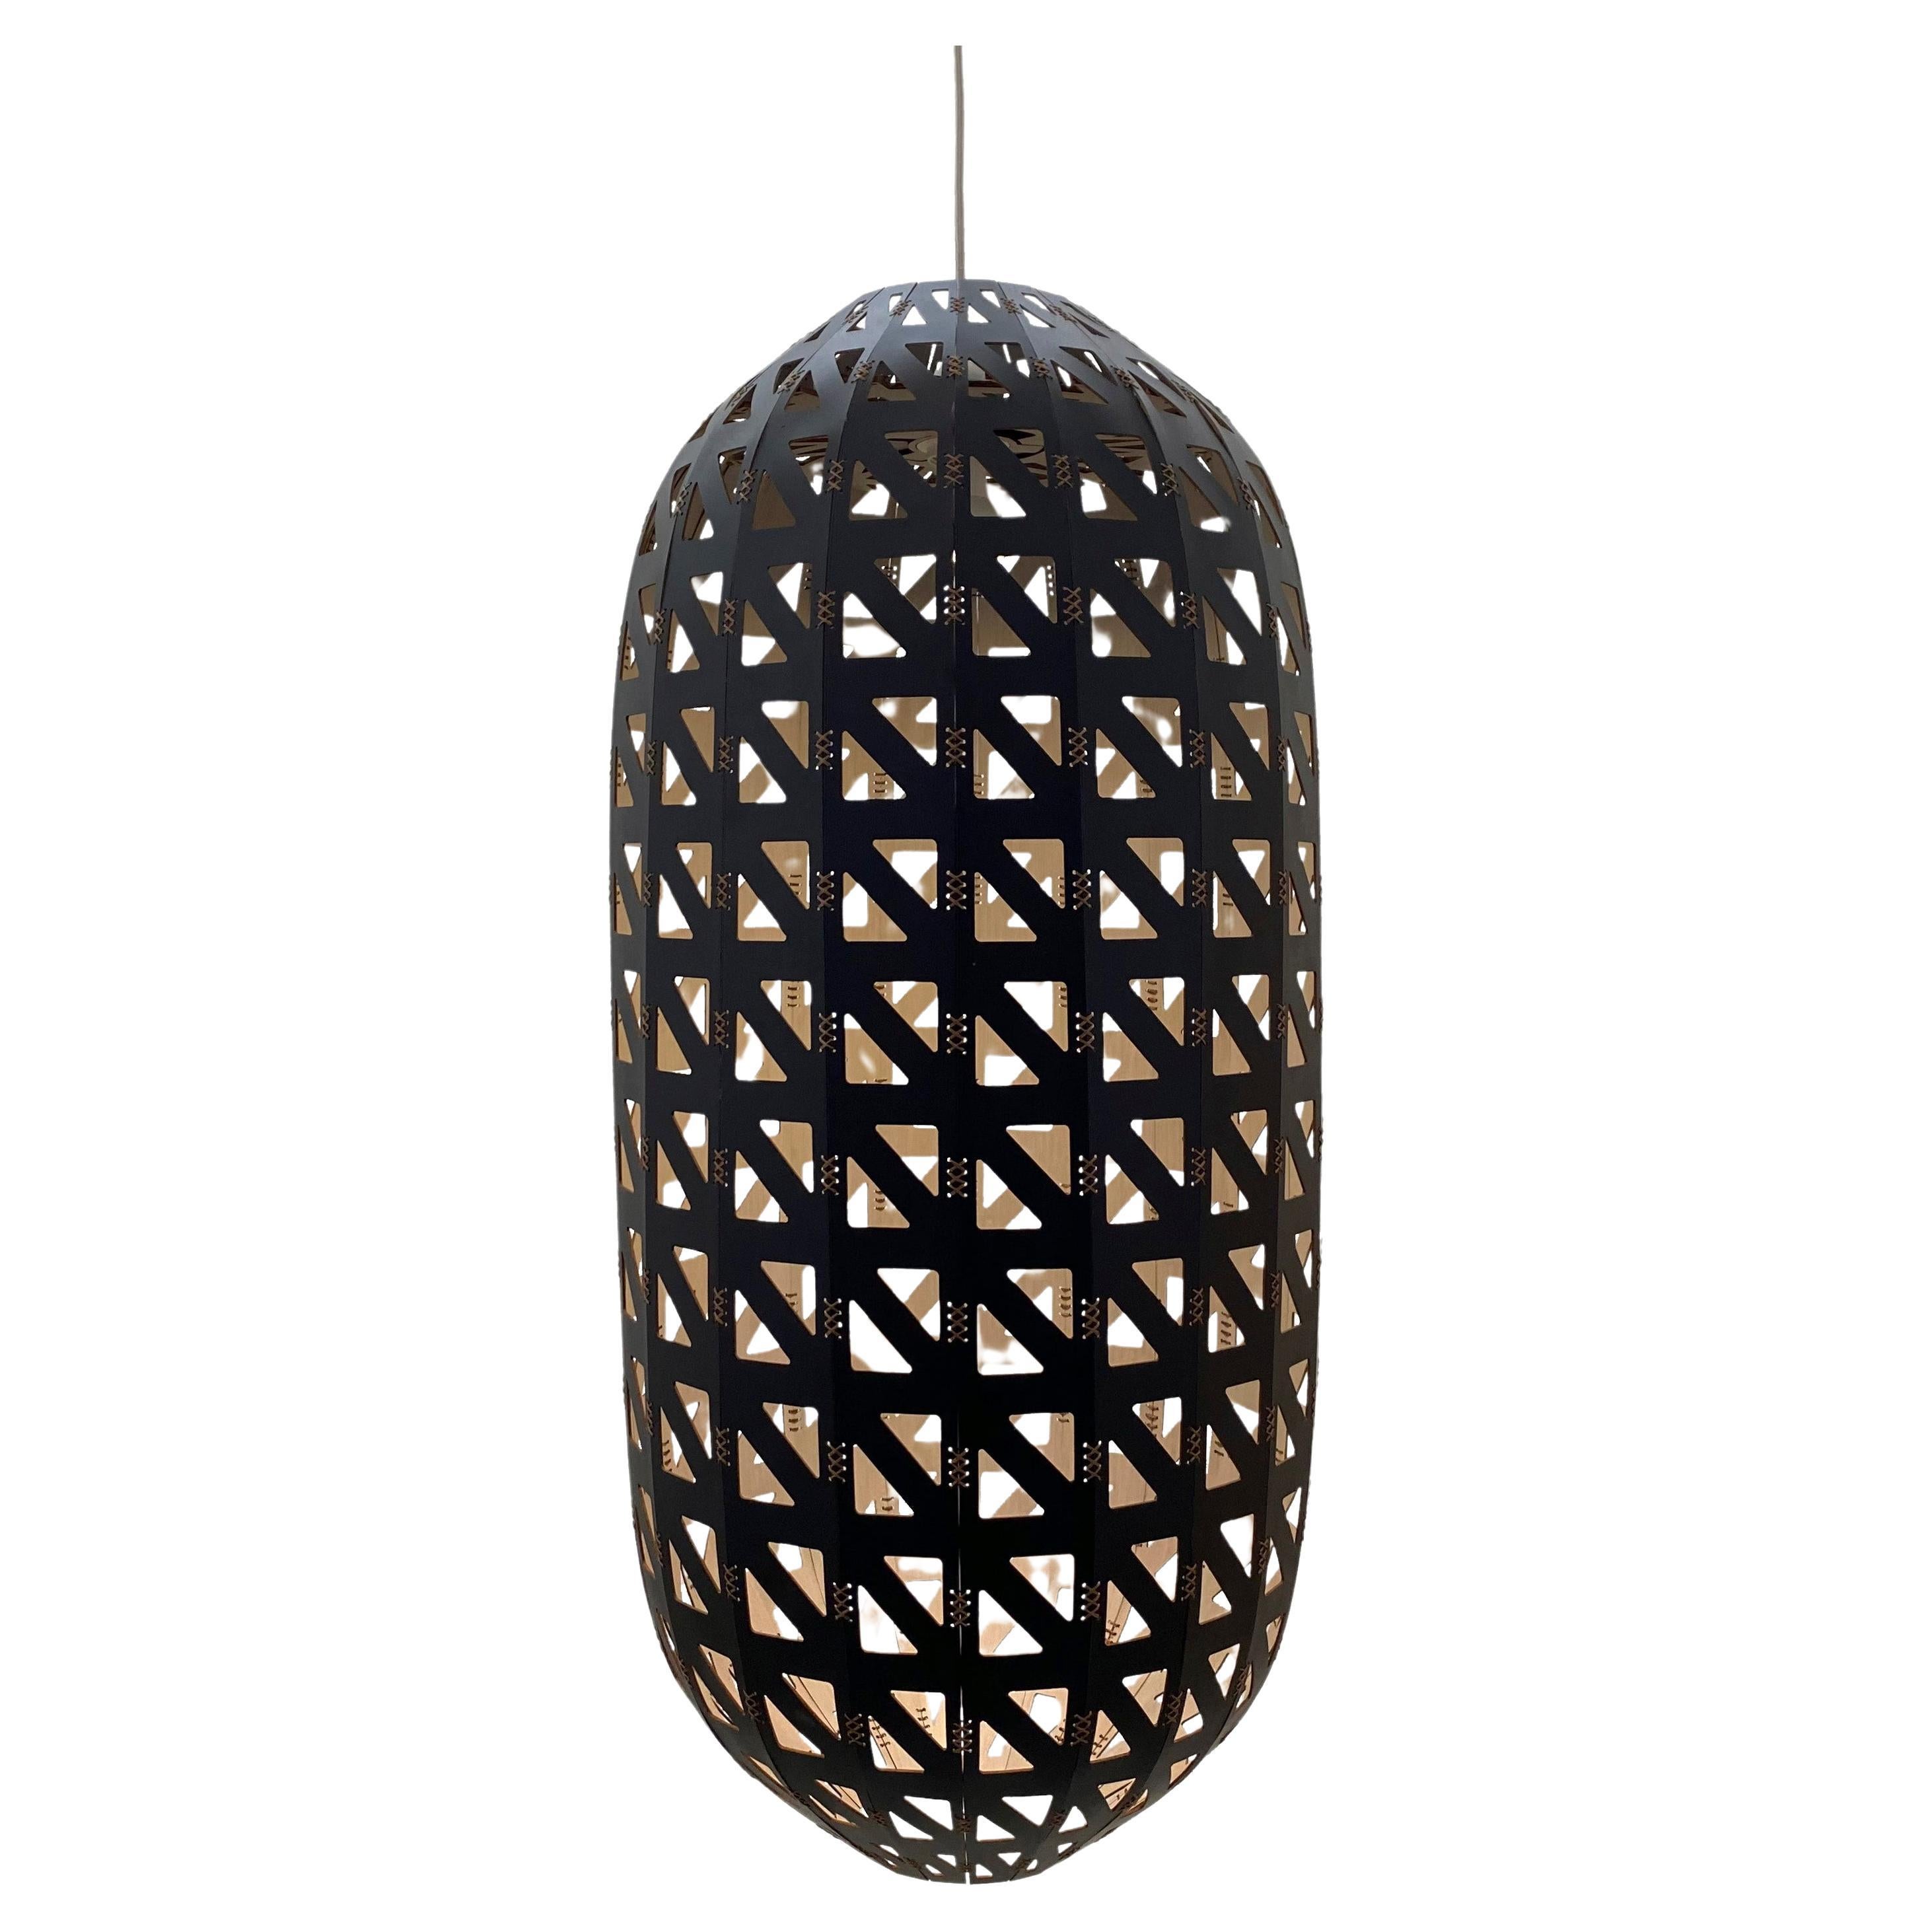 Panelitos Pineaple Lamp Medium by Piegatto For Sale